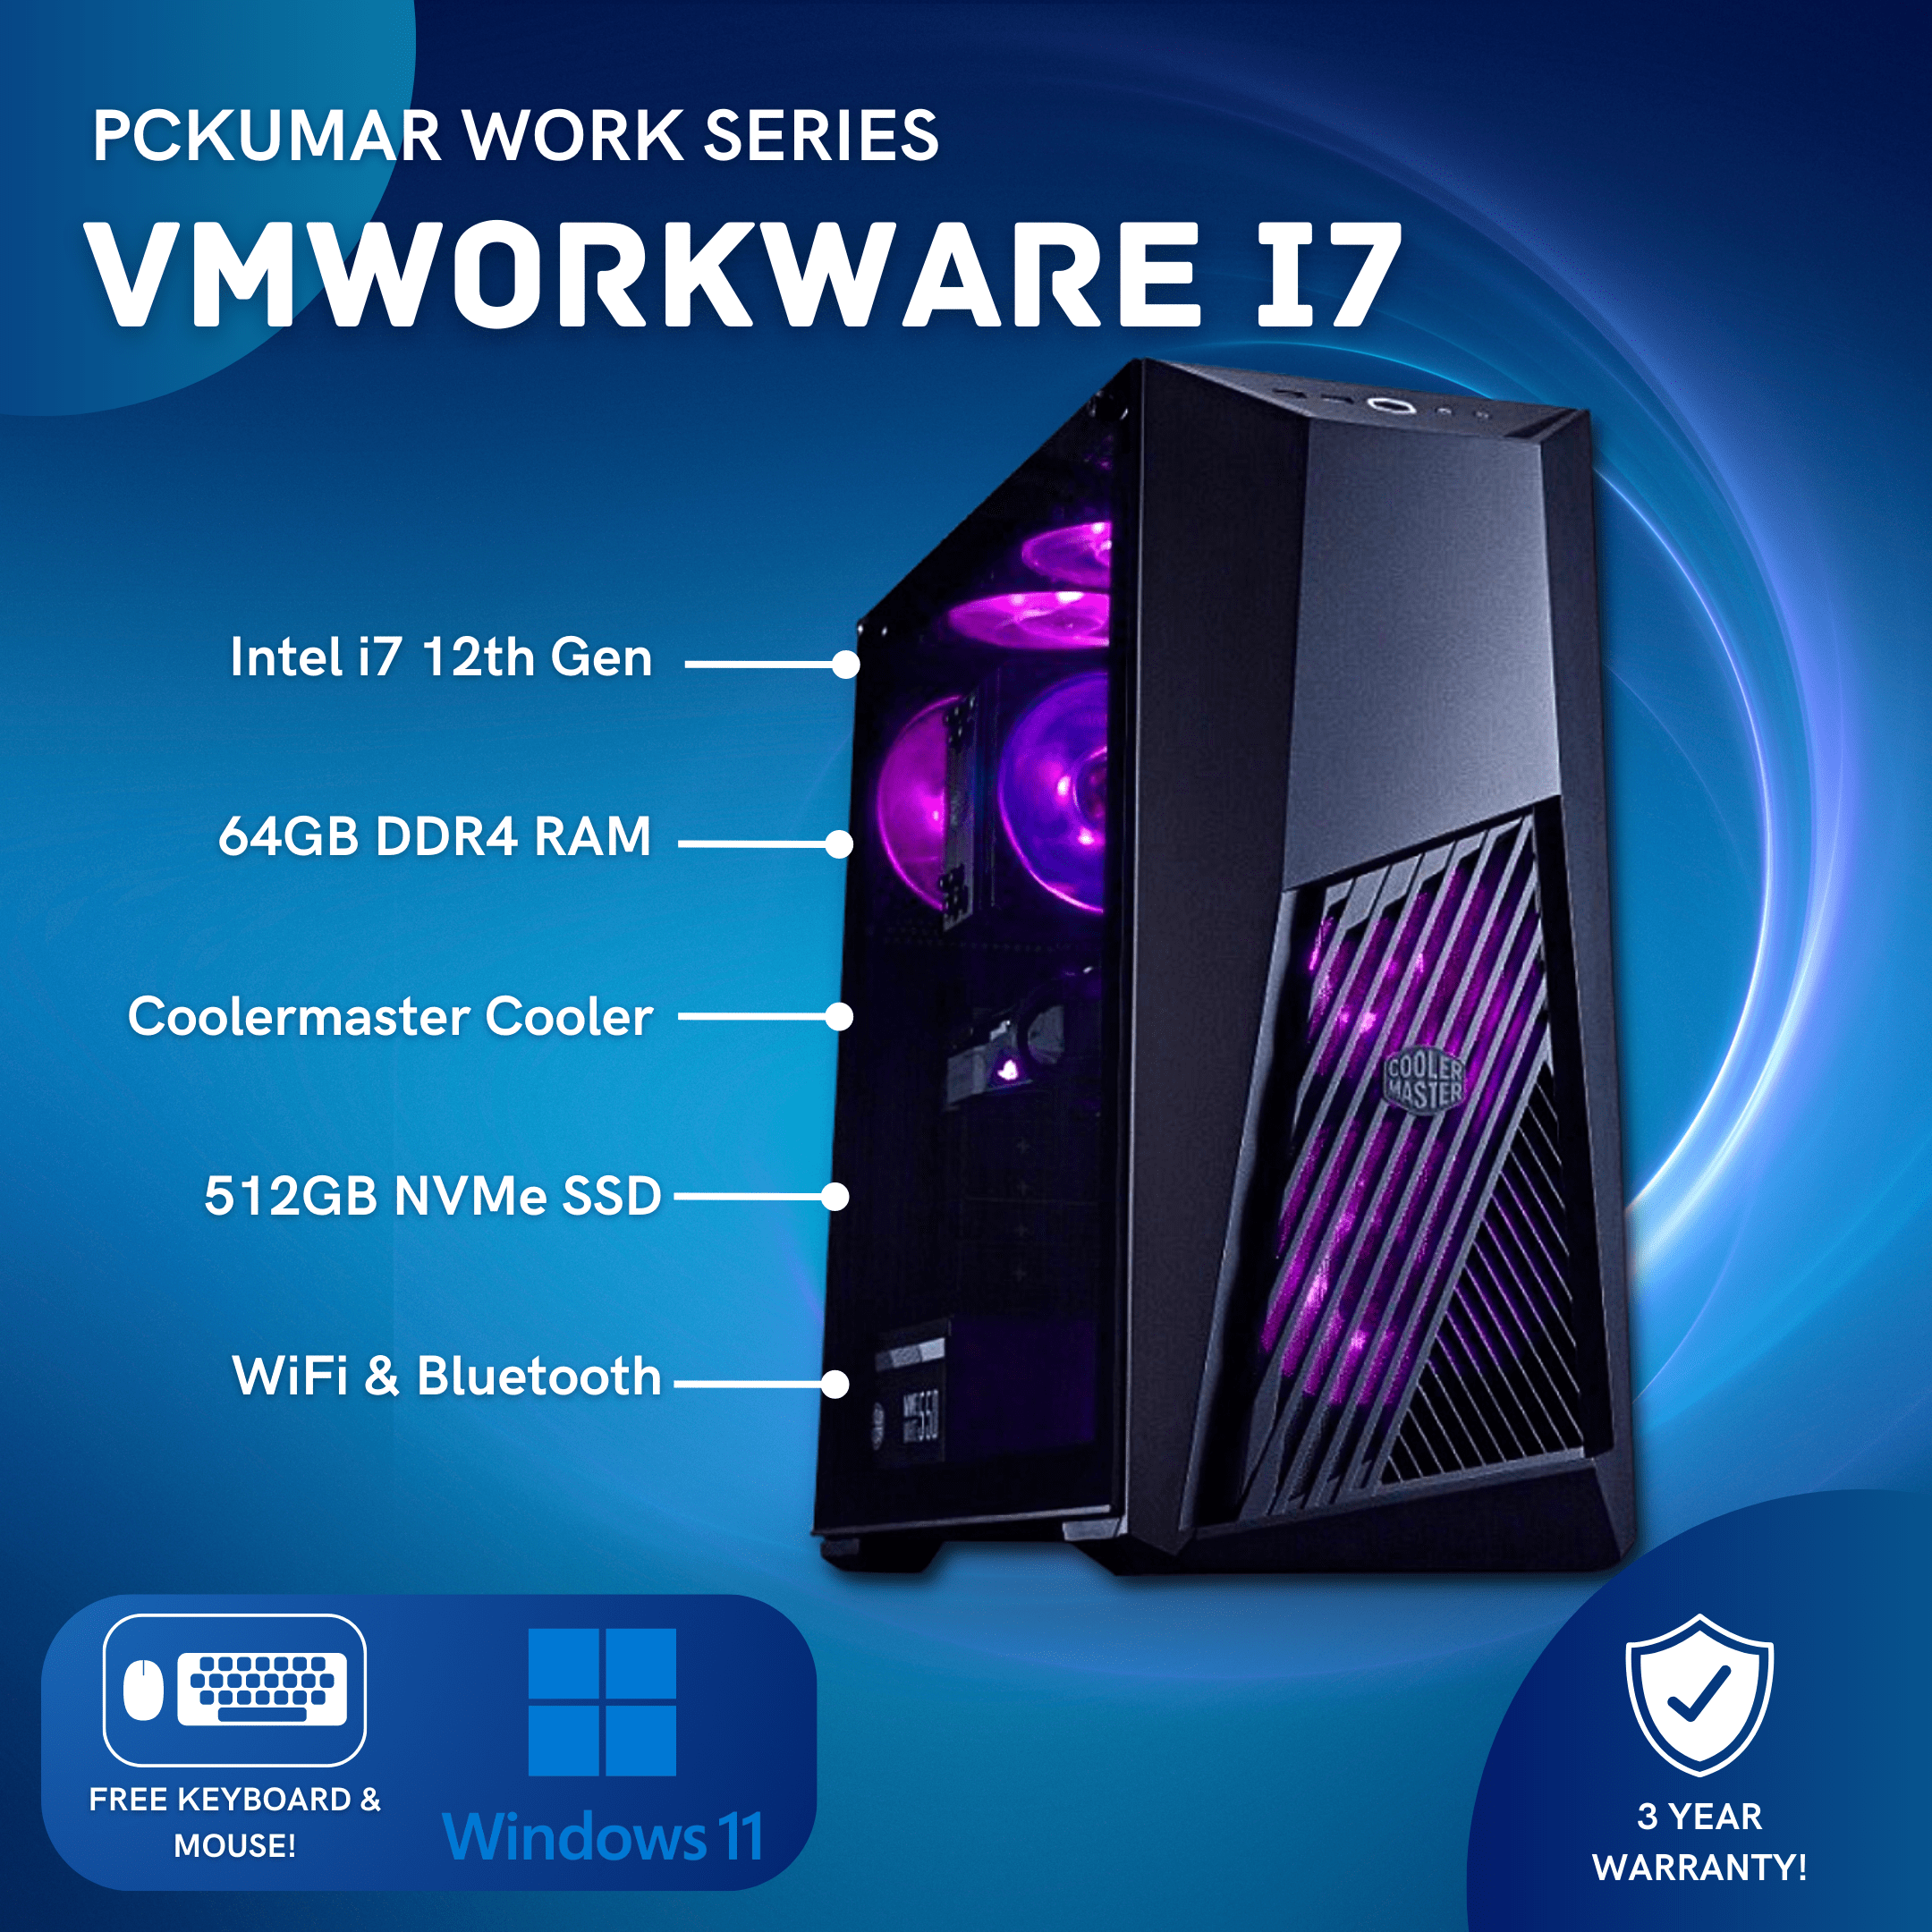 Vmworkware i7 12th Gen PC for 71593/-